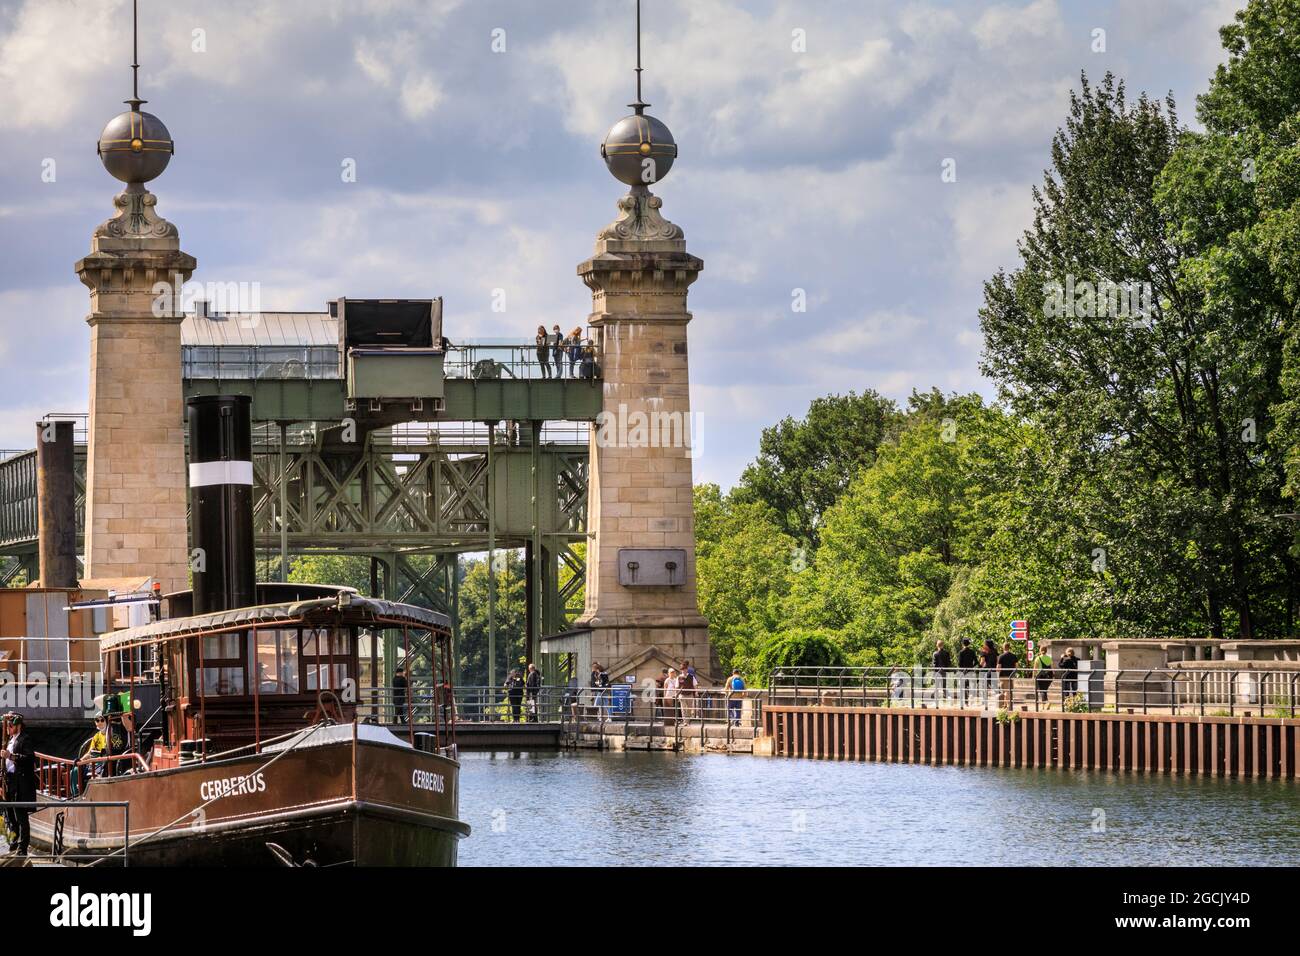 Schiffshebewerk, Henrichenburg Old Boat Lift, Industrial Heritage site on Dortmund Ems Canal, Waltrop, North Rhine-Westphalia, Germany Stock Photo